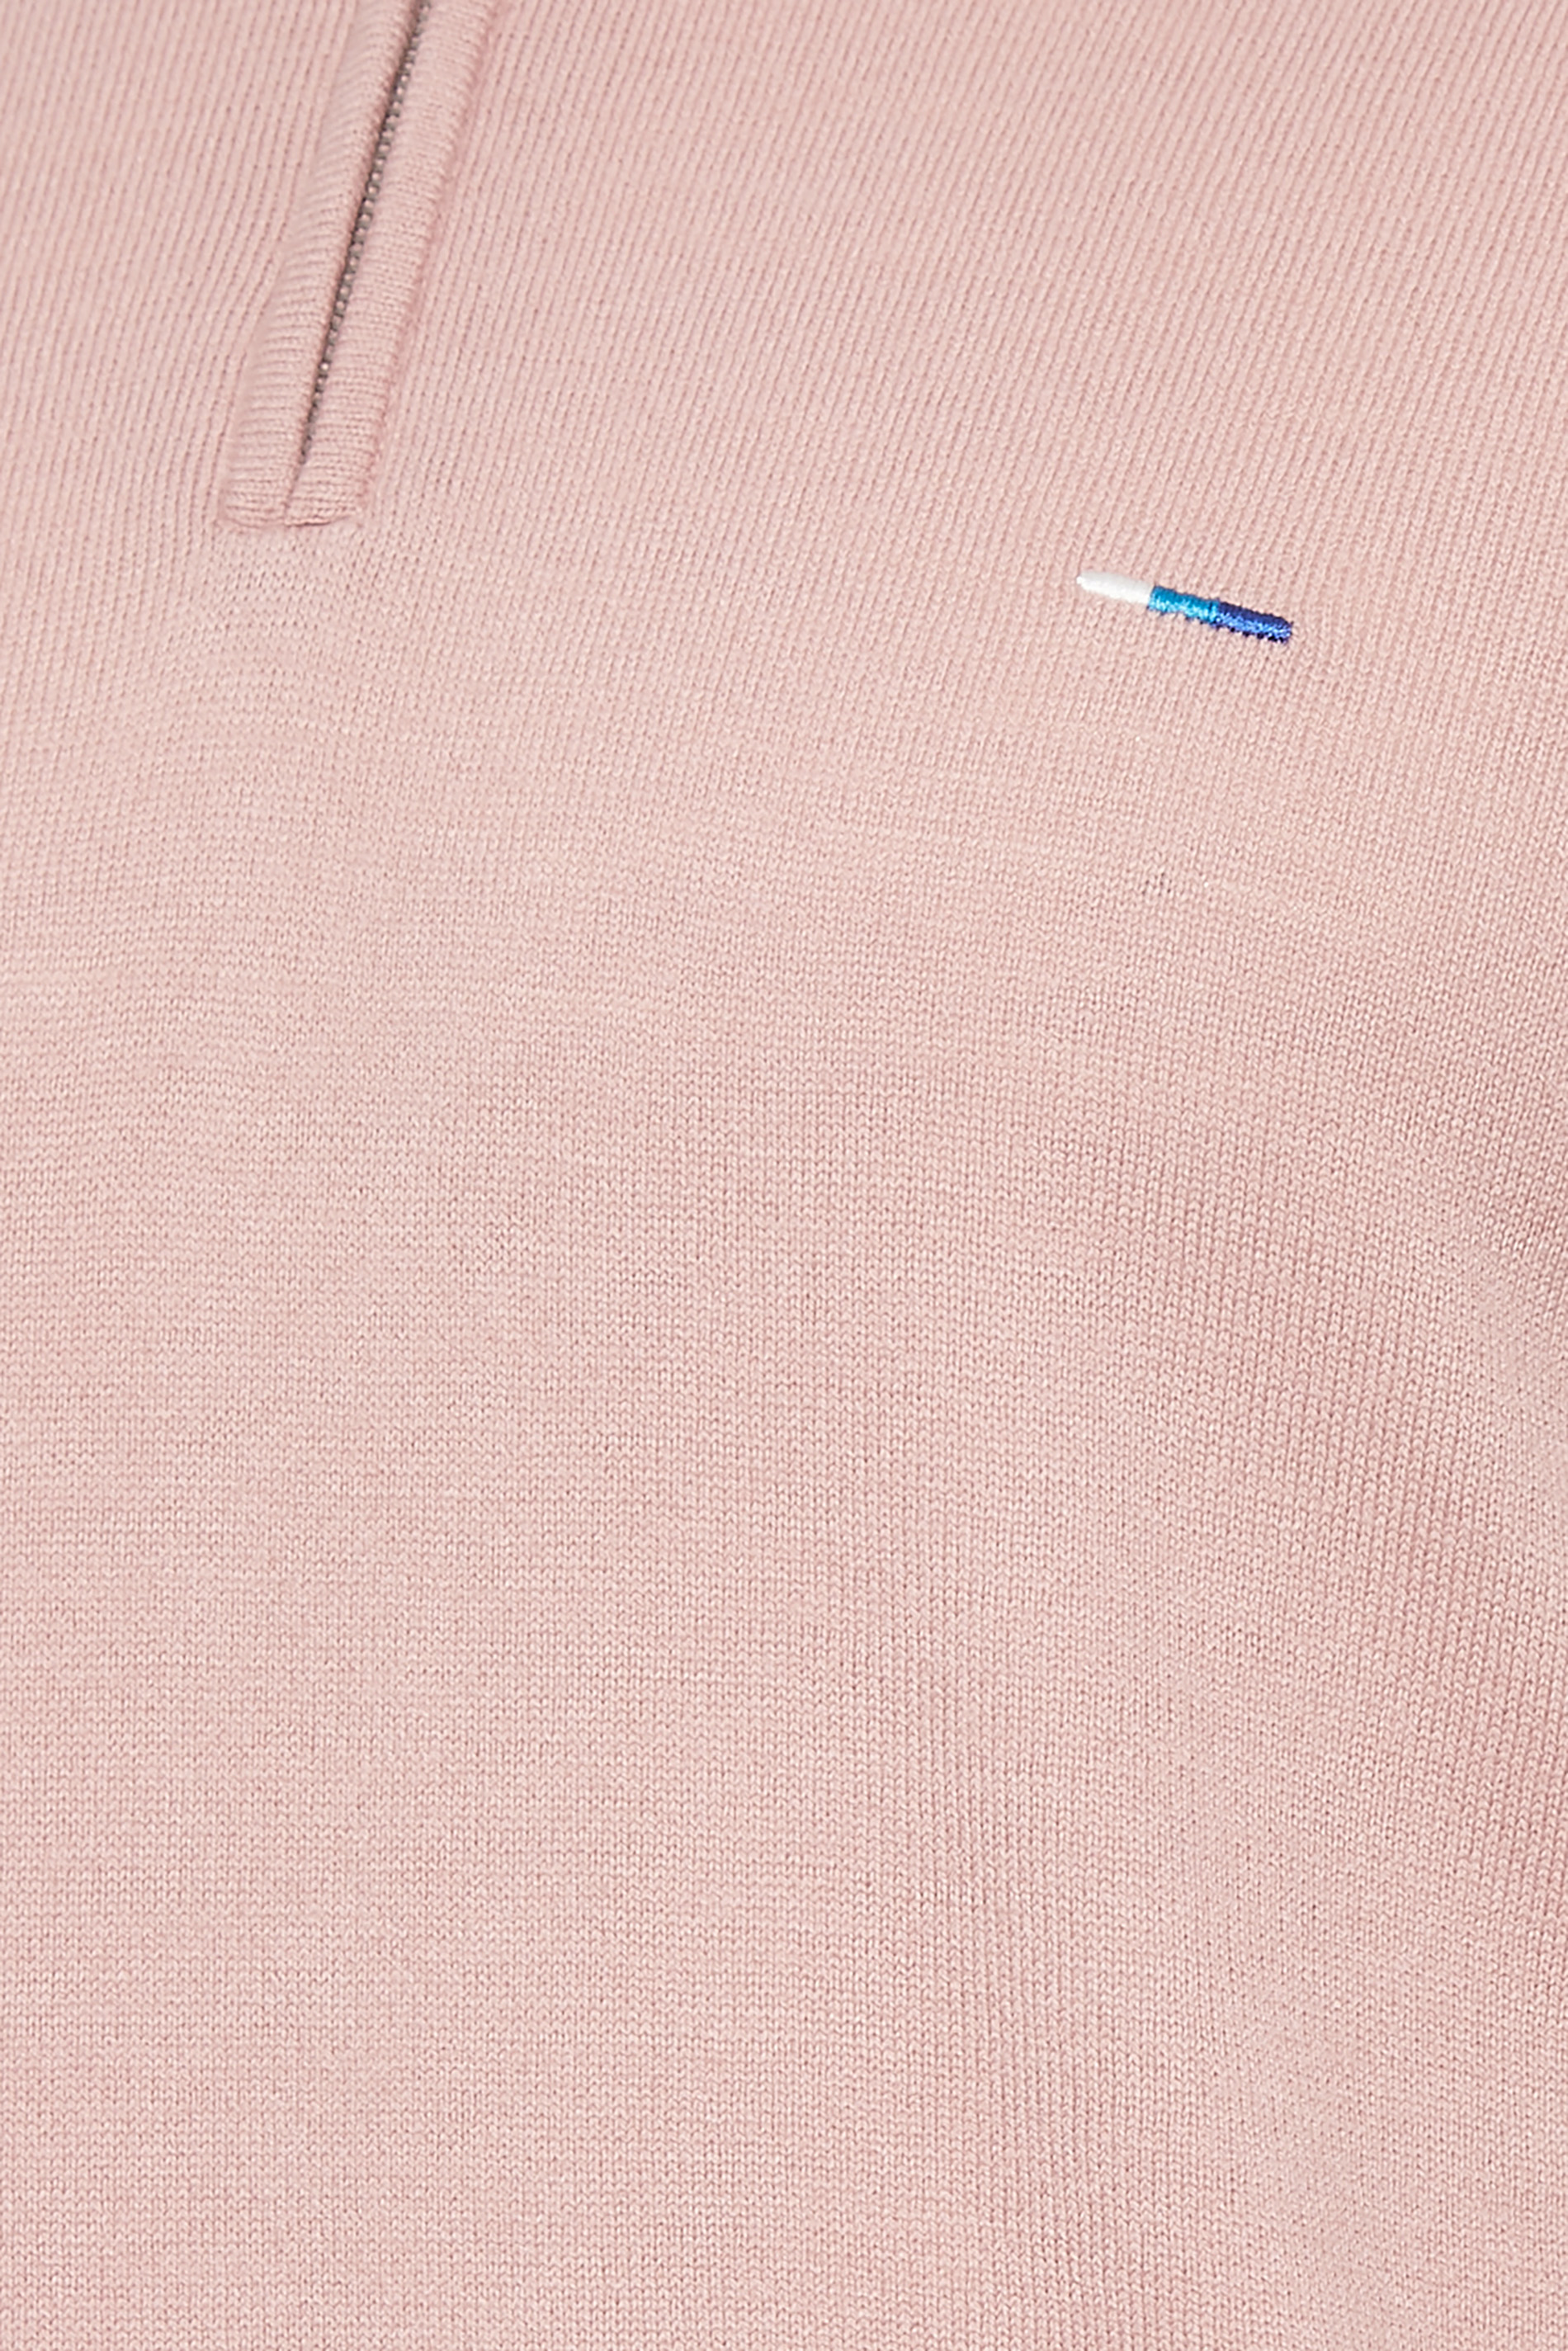 BadRhino Big & Tall Pink Stripe Knitted Polo Shirt | BadRhino 2